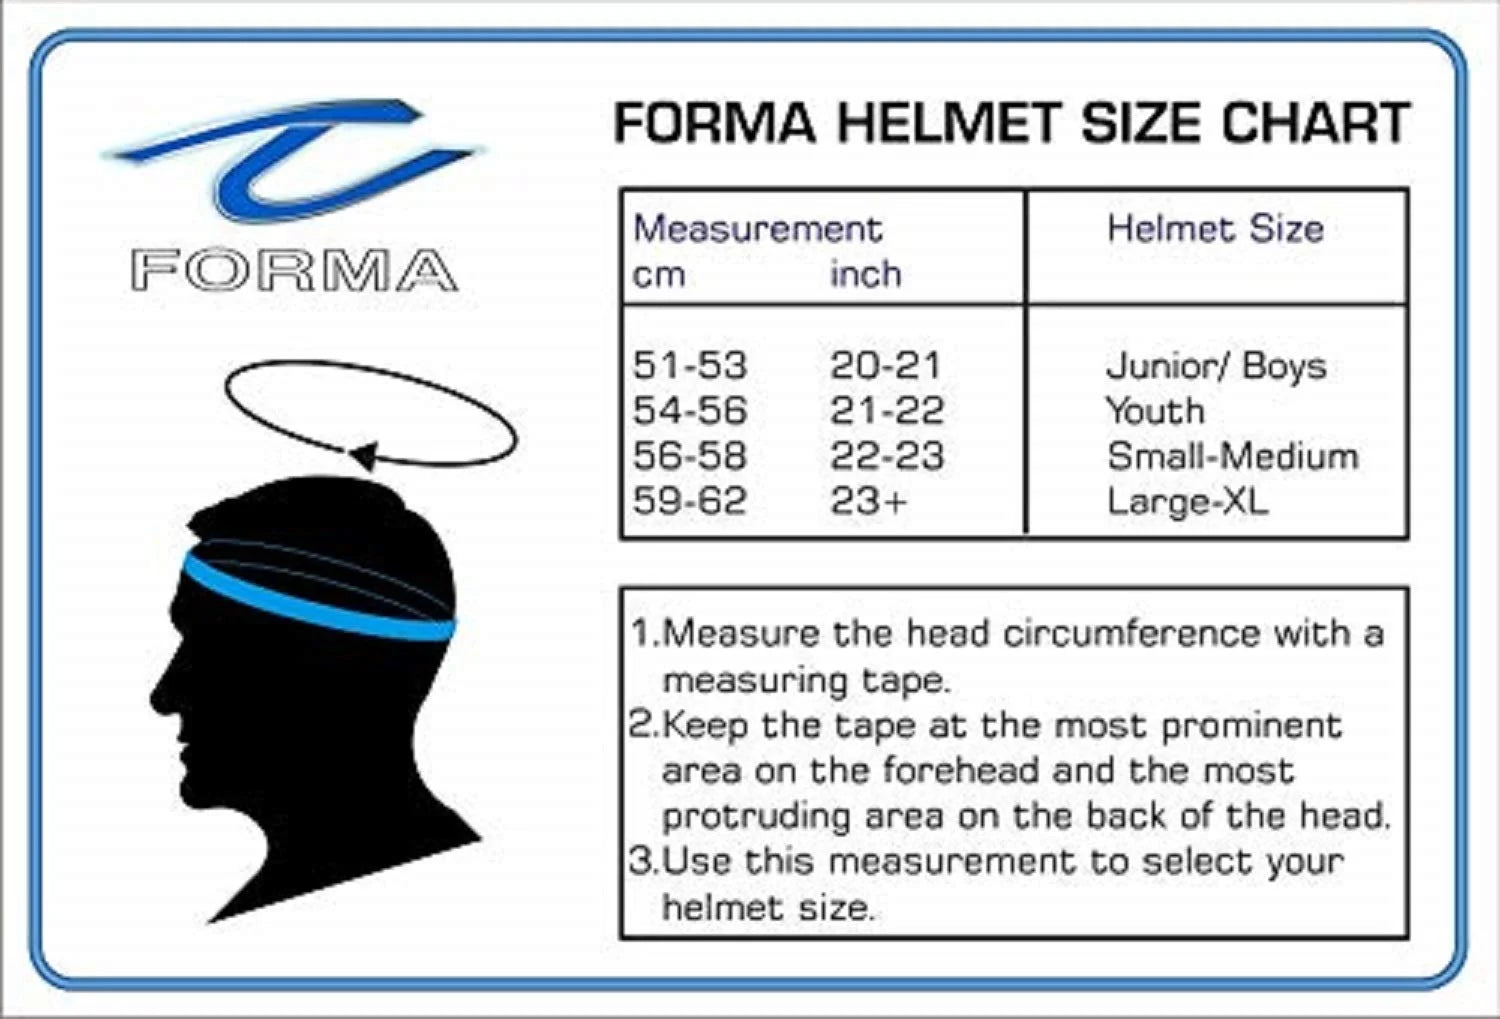 FORMA Test Plus TNM Helmet